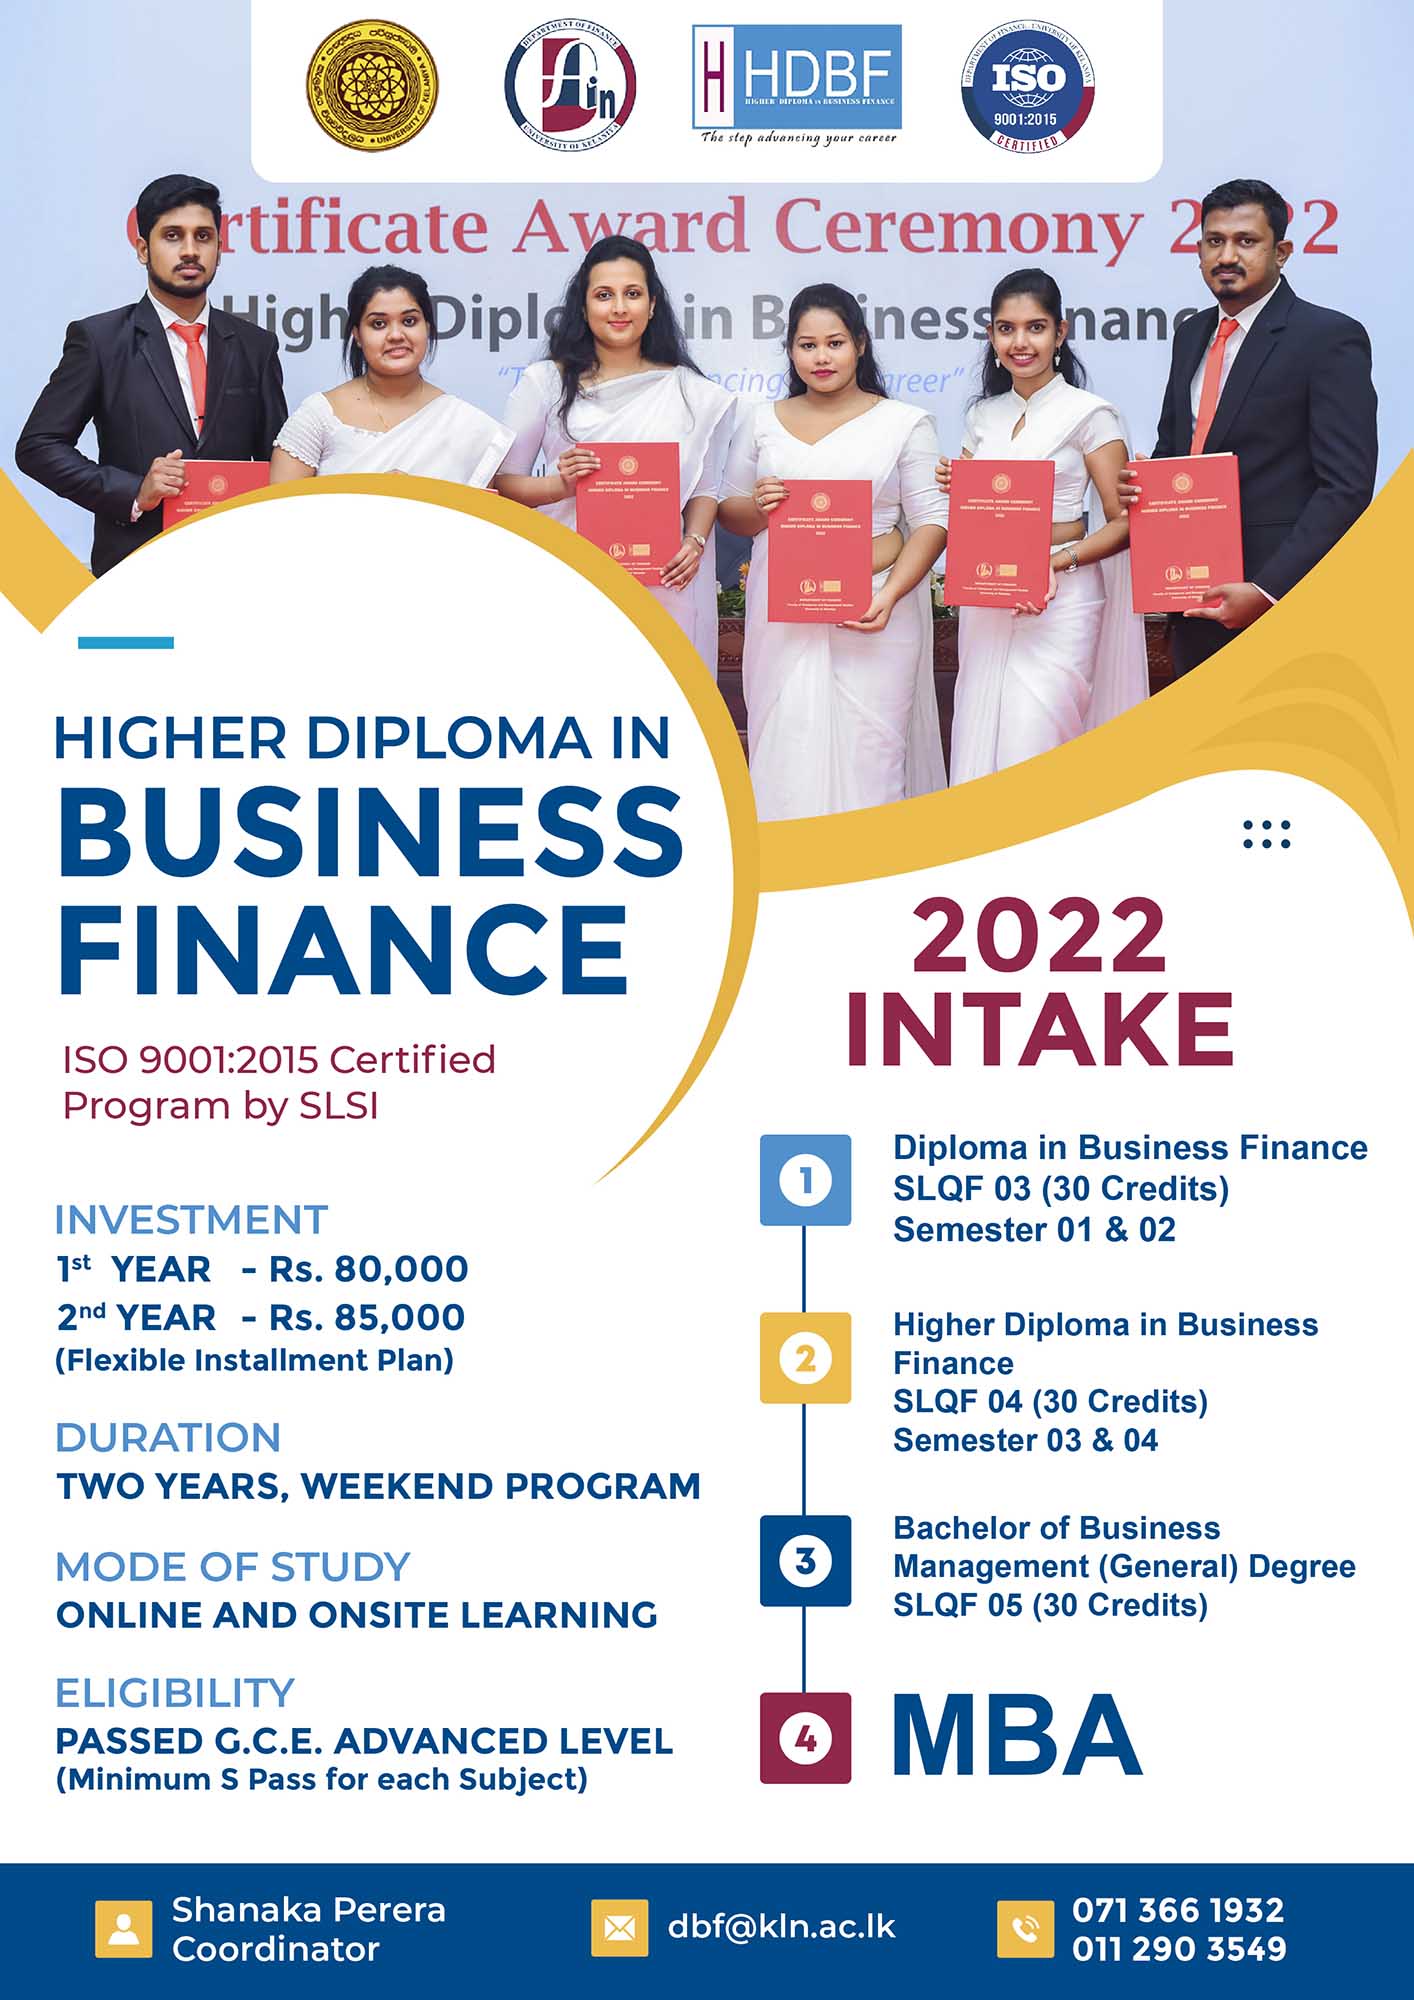 Calling Applications for Diploma / Higher Diploma in Business Finance (HDBF) Programme 2022/2023 - University of Kelaniya